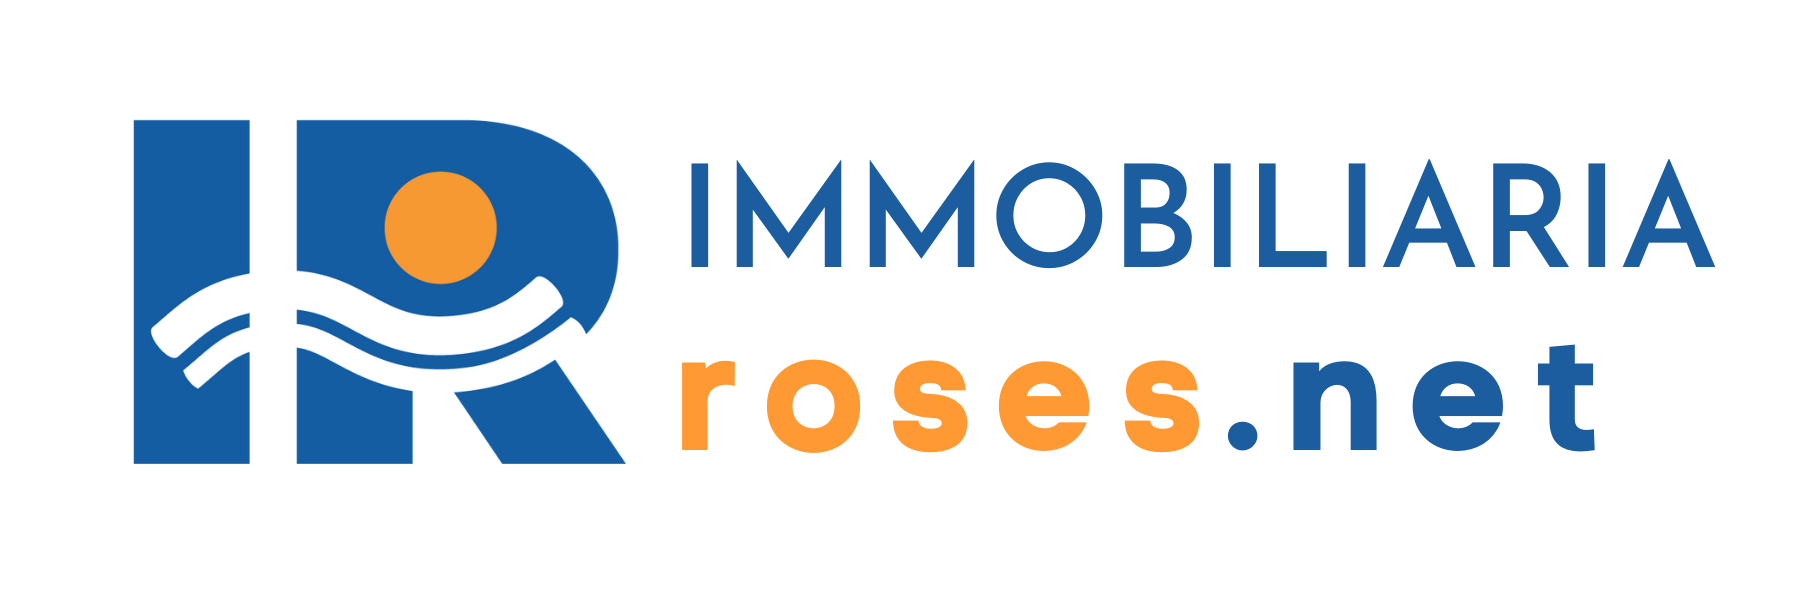 Immobiliaria Immo Roses.net - Assesorament Immobiliari Costa Brava